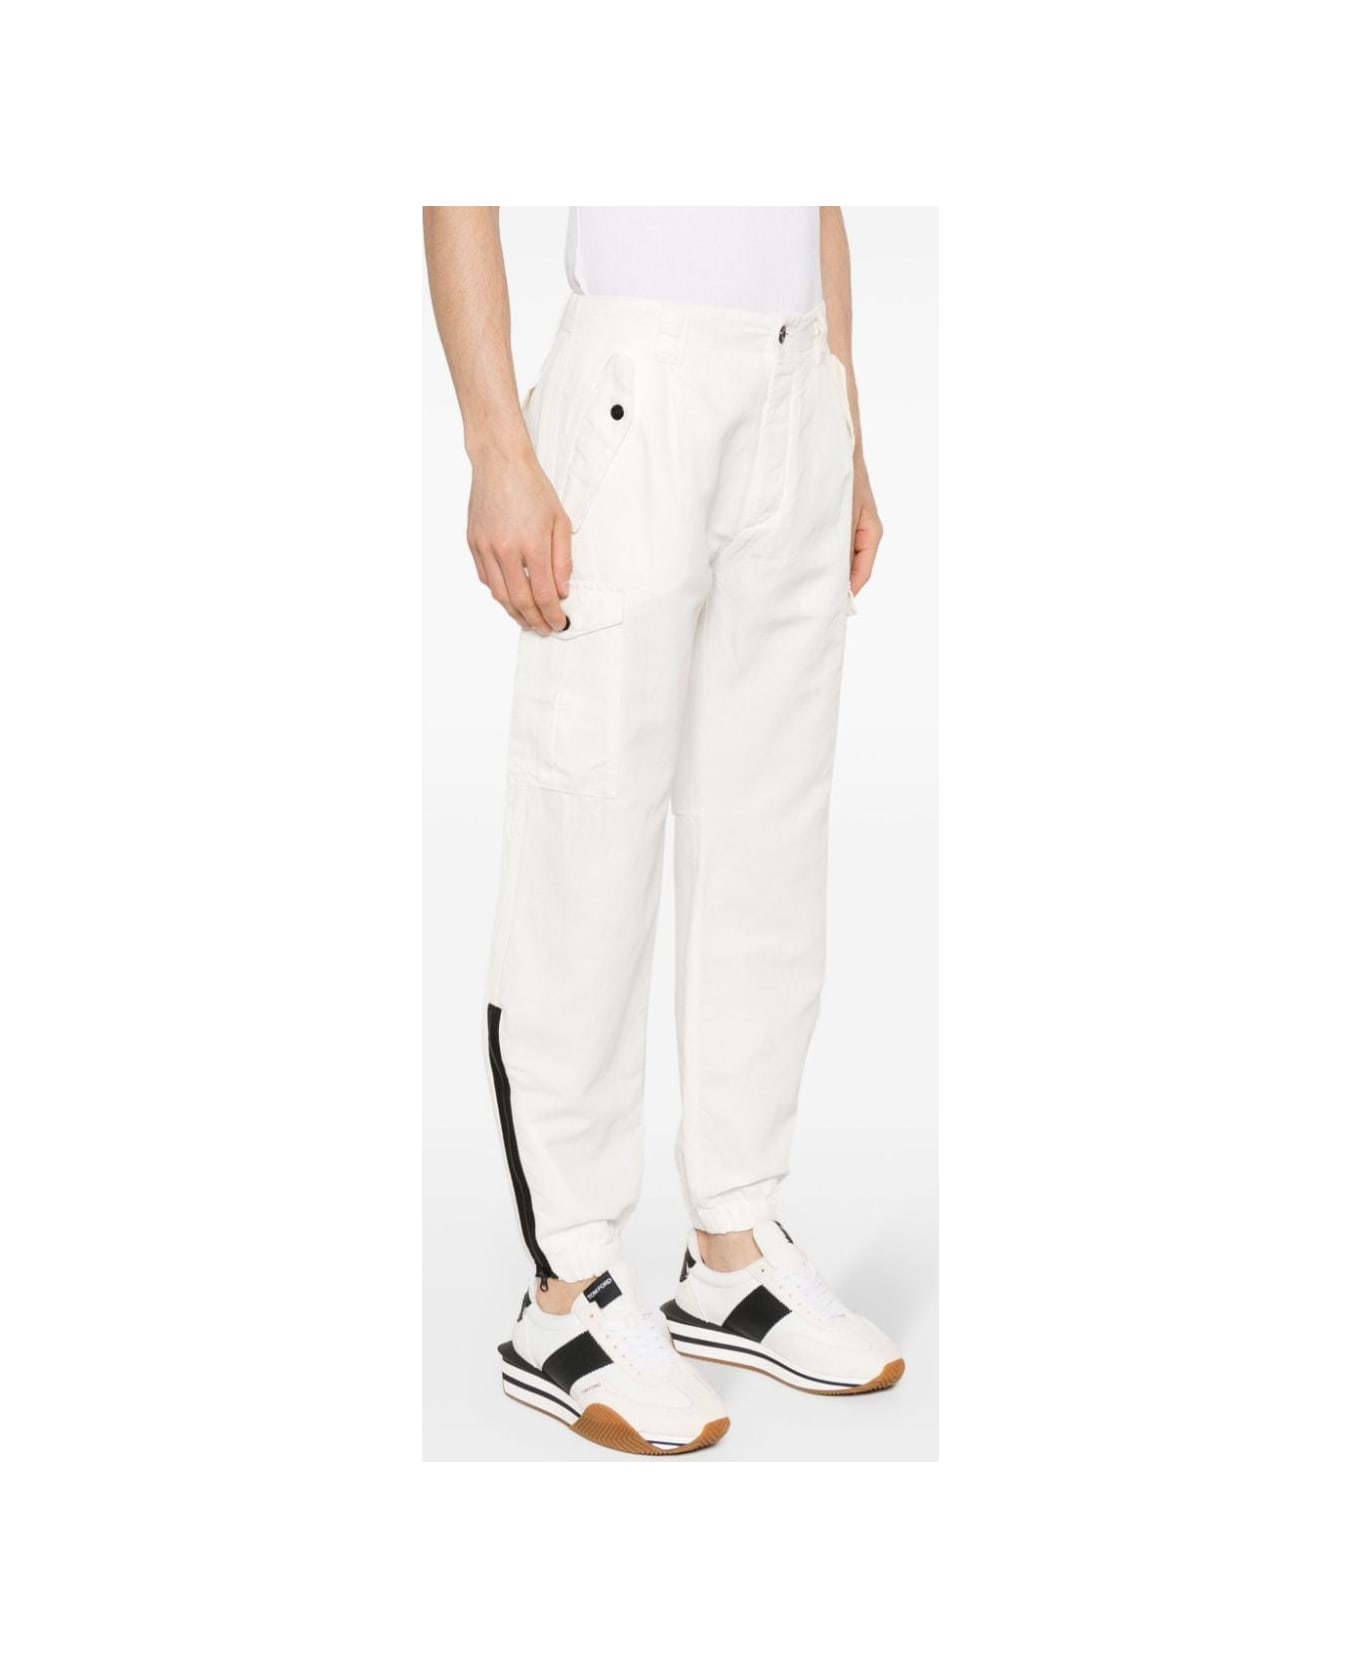 C.P. Company Trousers - White